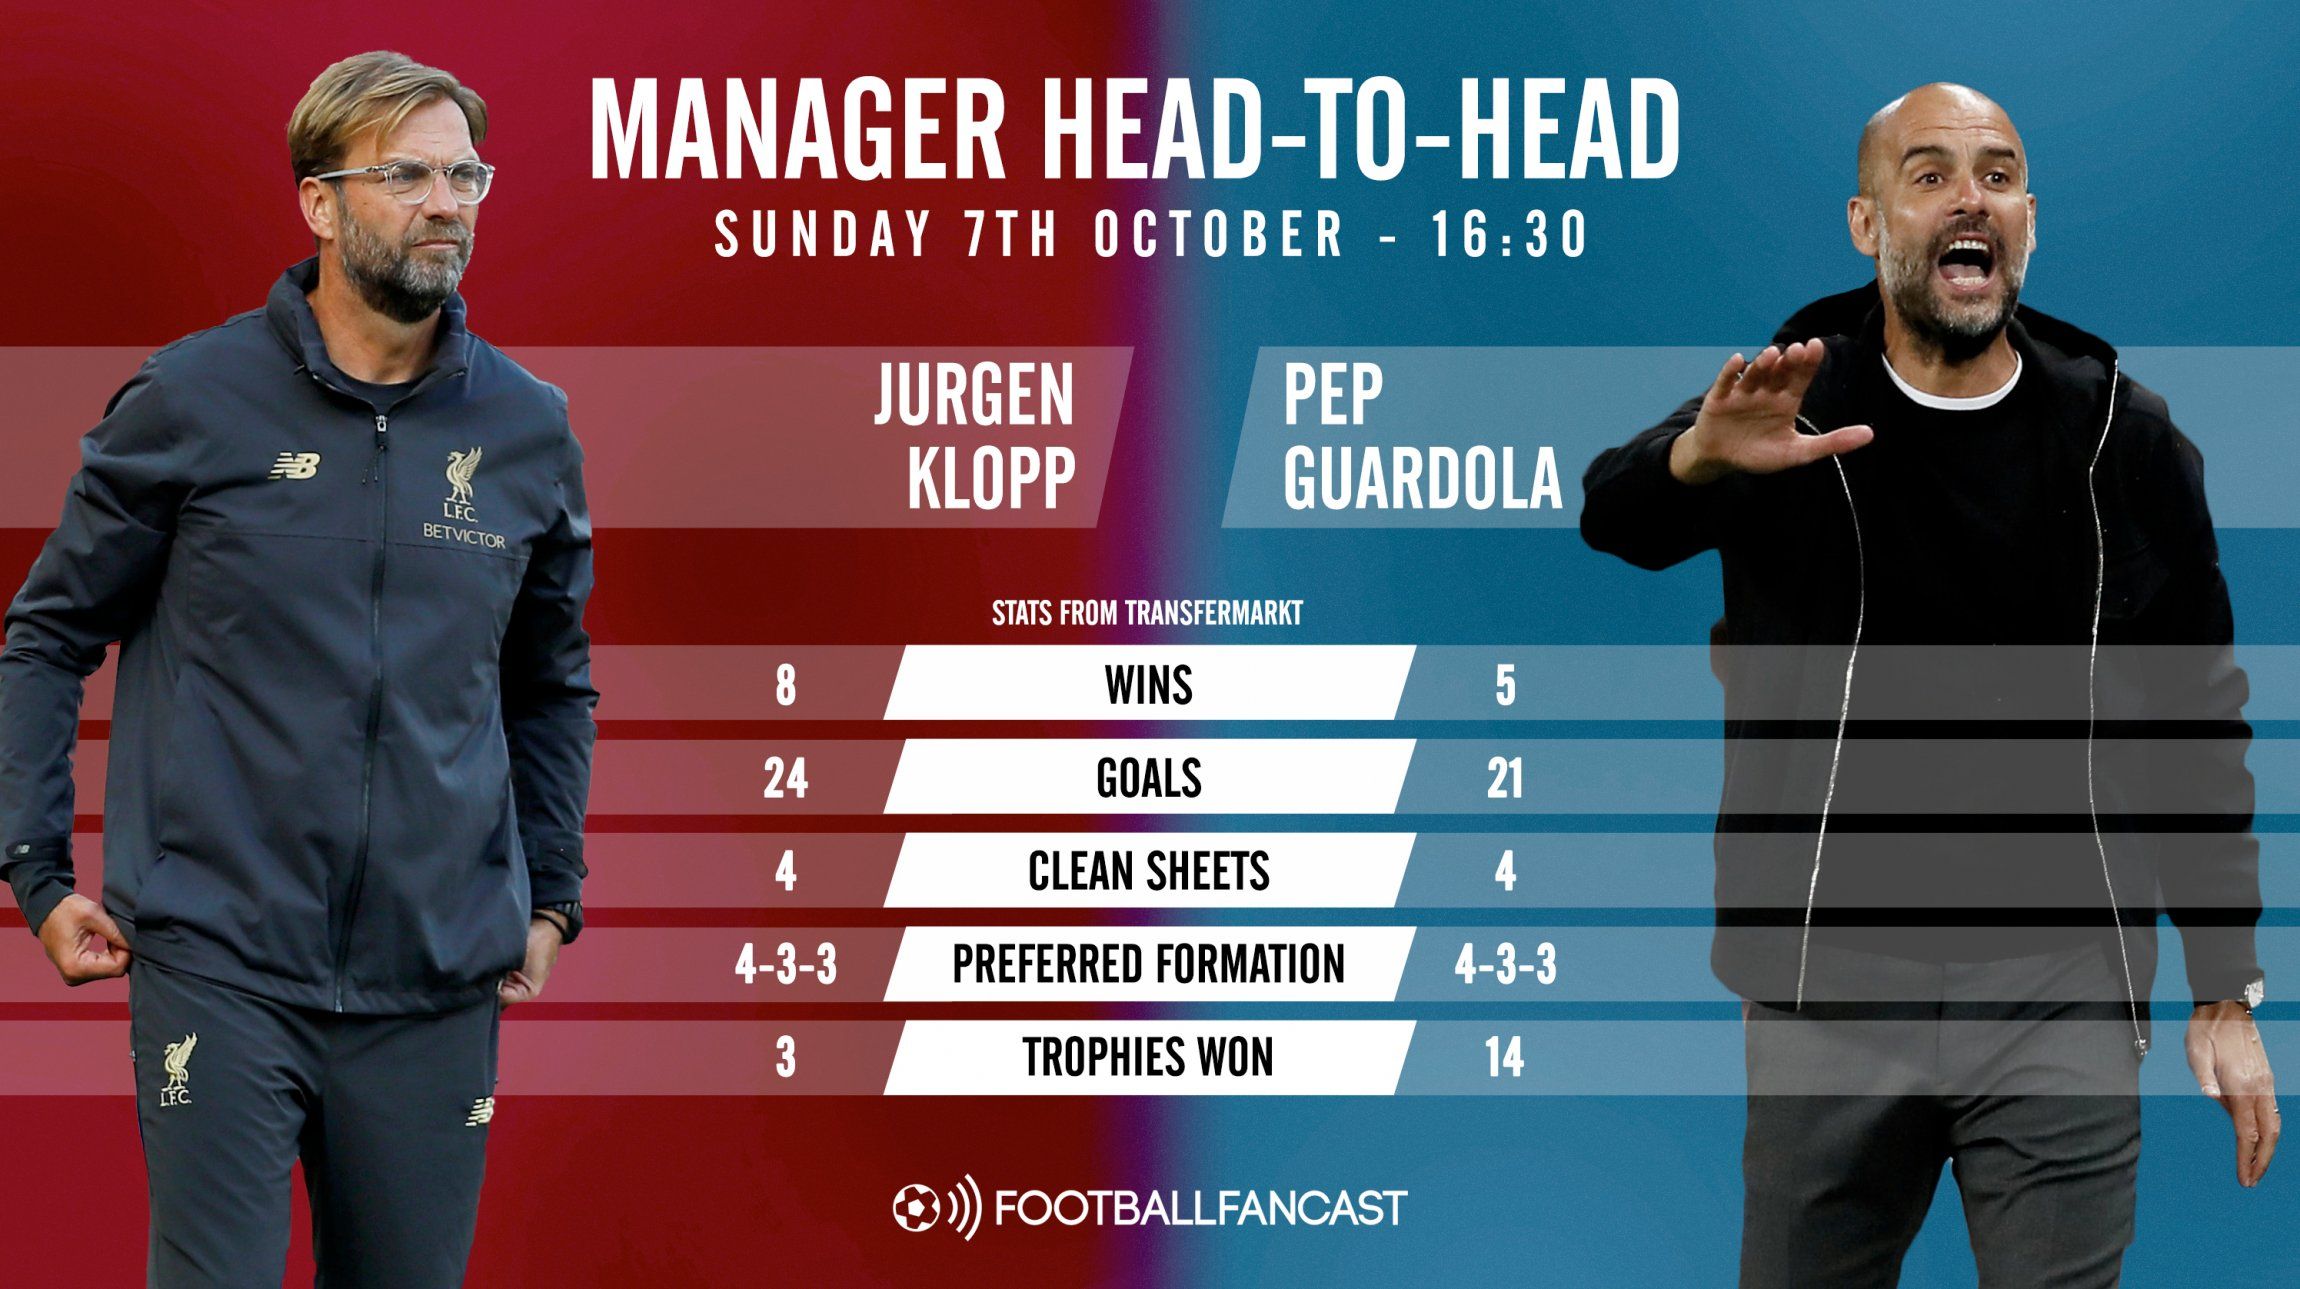 Jurgen Klopp vs Pep Guardiola - Liverpool vs Manchester City